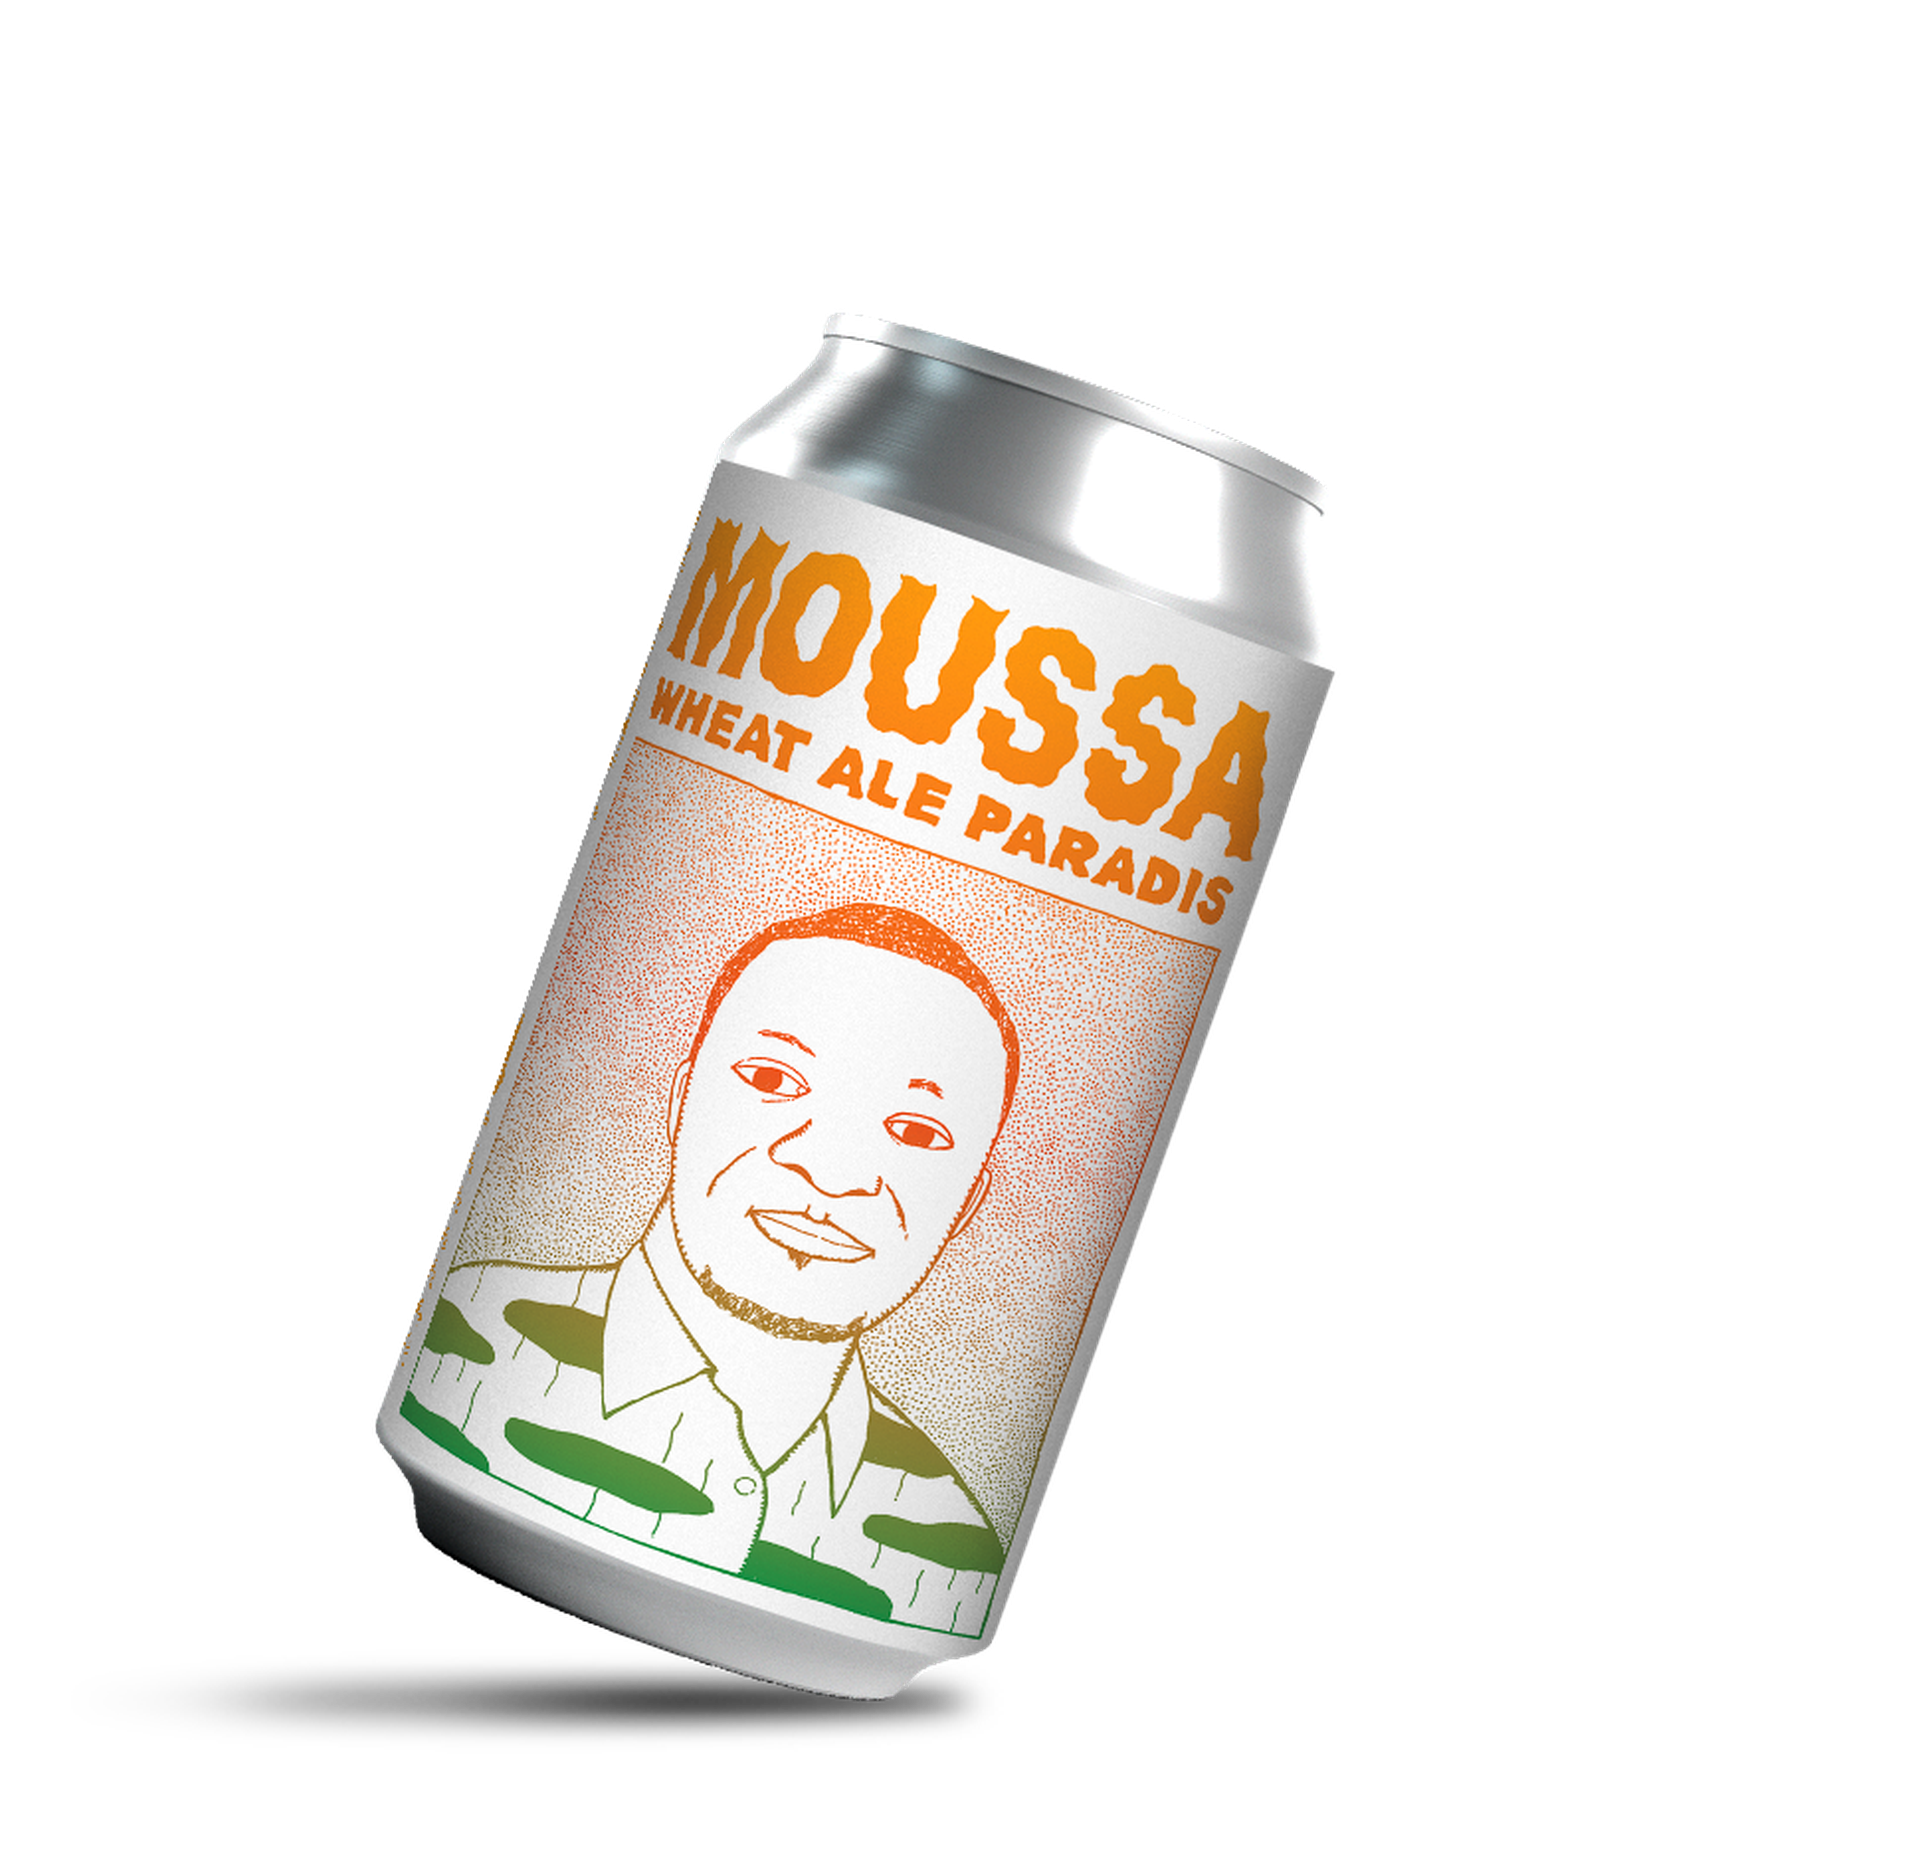 Moussa-44